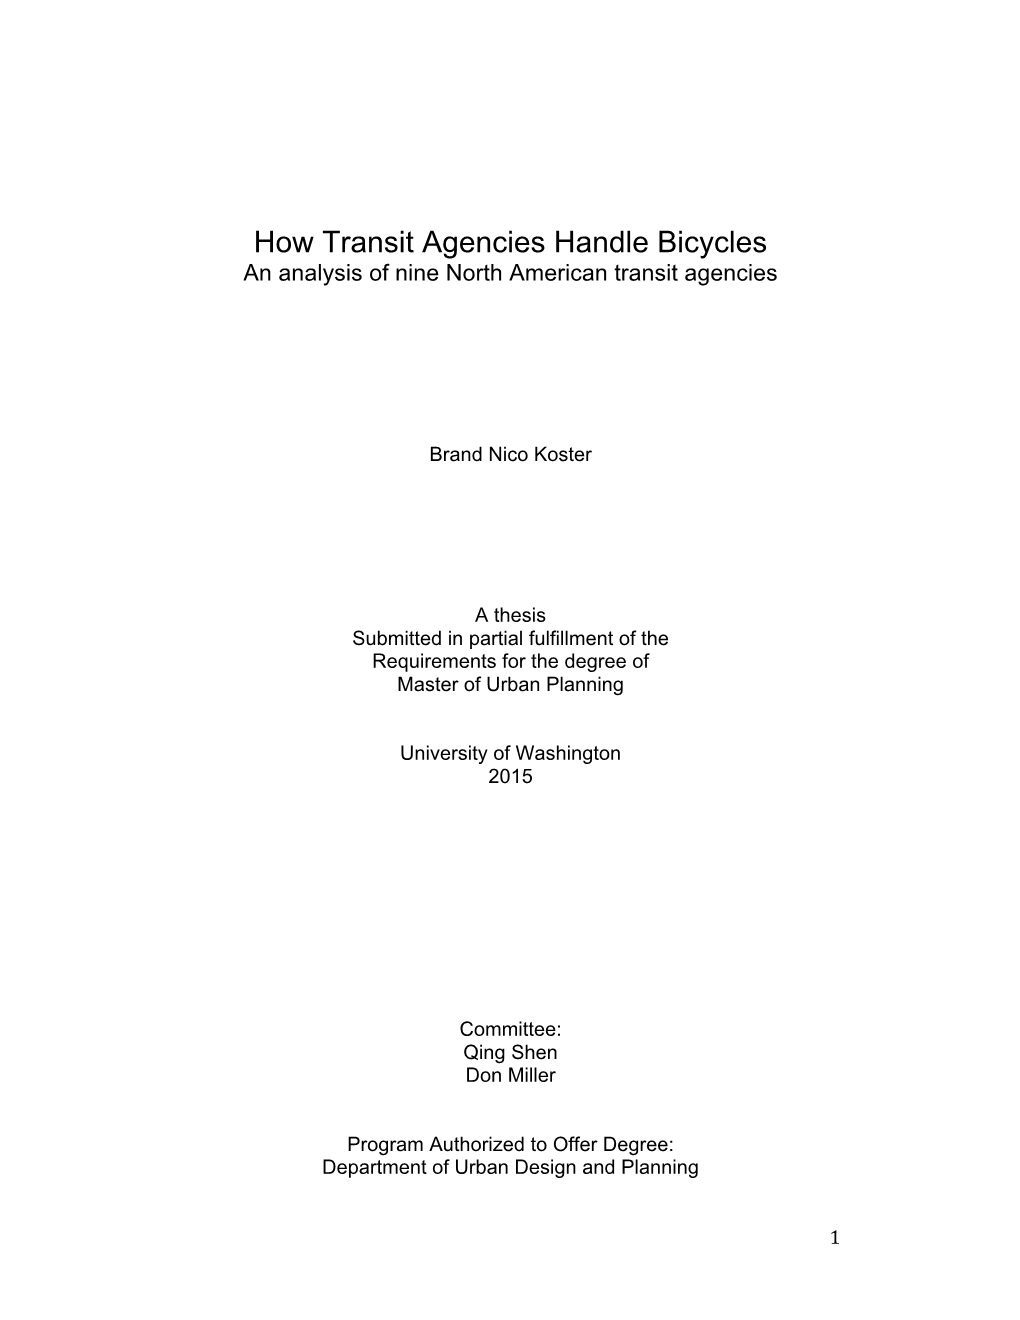 How Transit Agencies Handle Bicycles an Analysis of Nine North American Transit Agencies